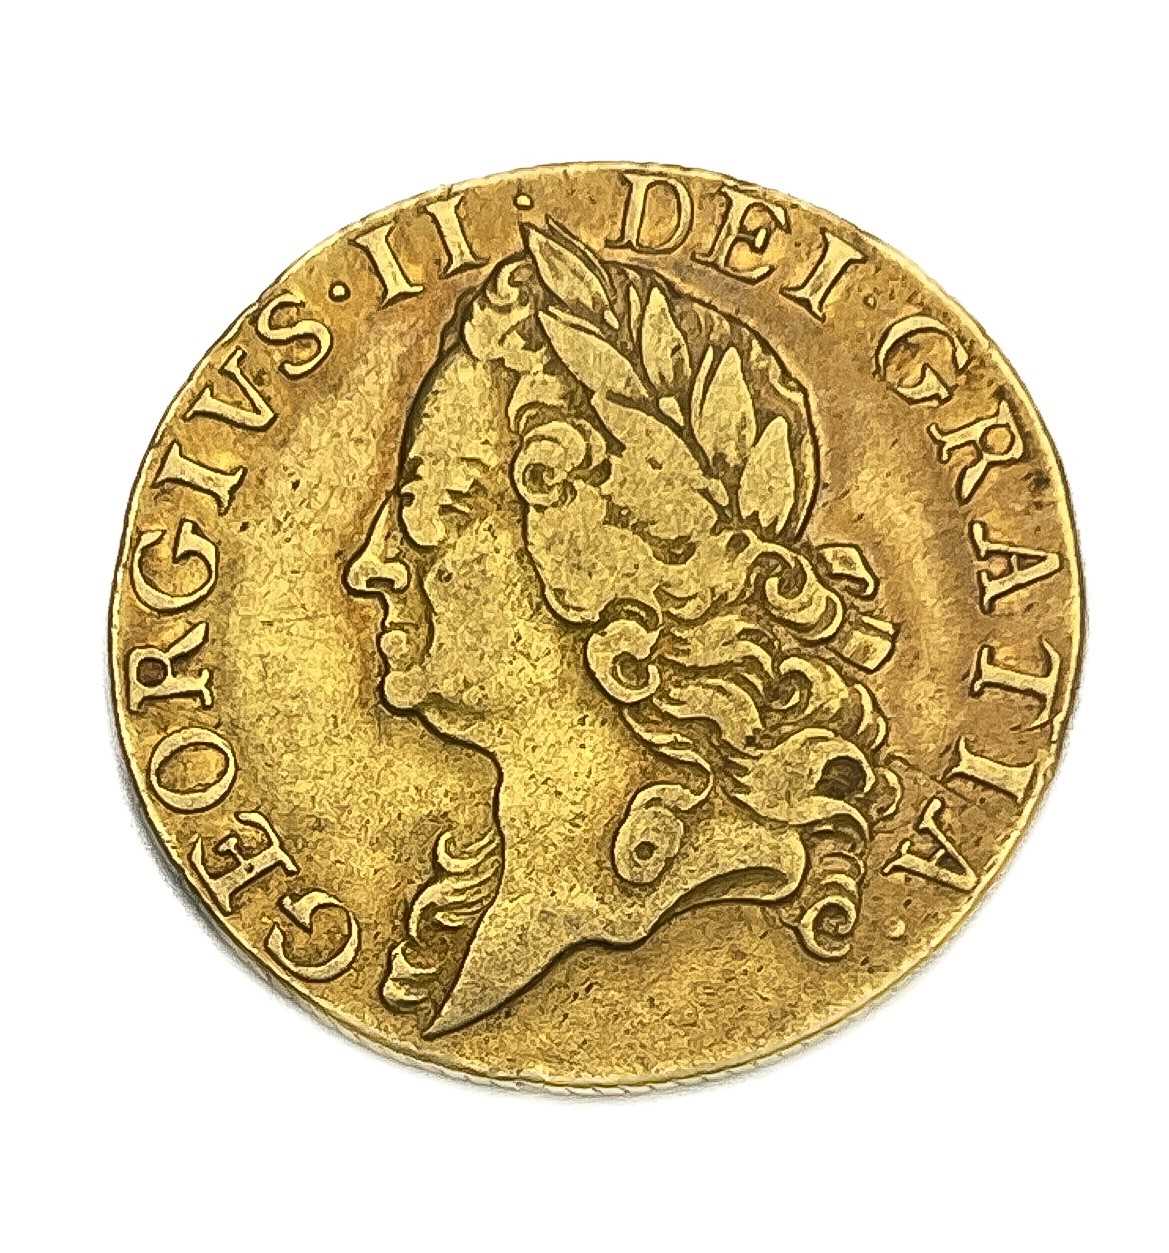 Guinea, George II, 1748. S.3680